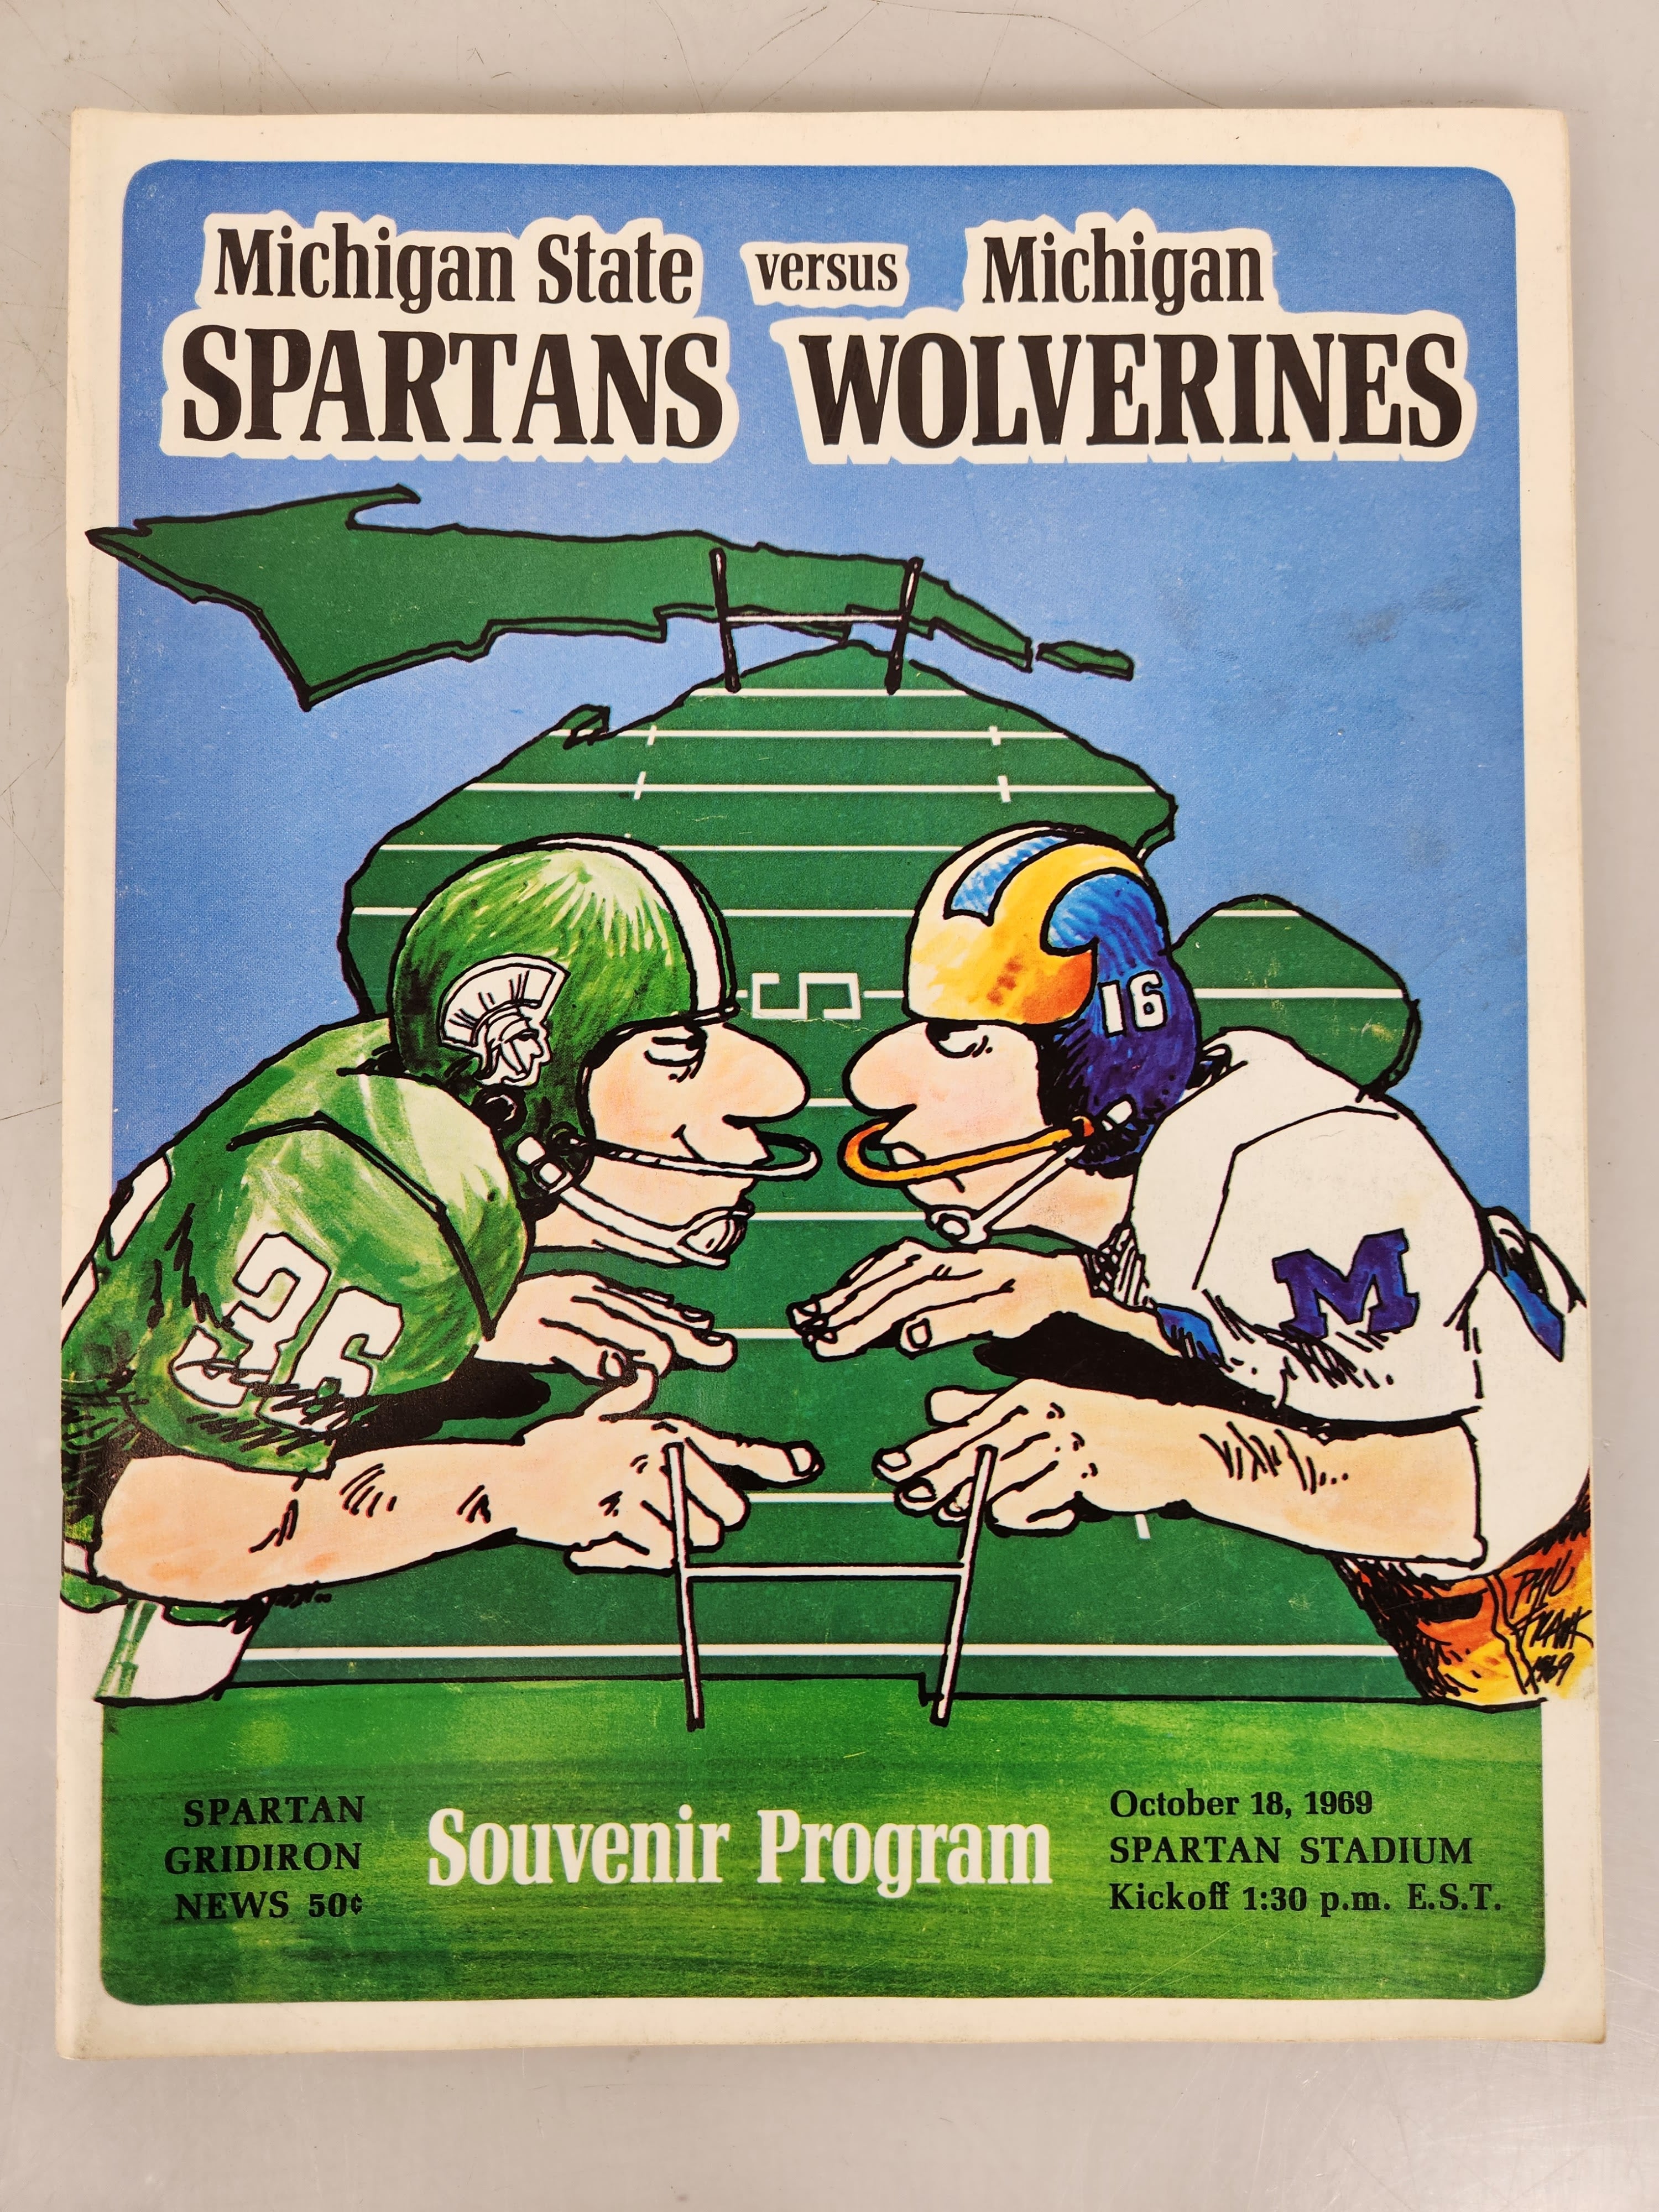 1969 Michigan State vs Michigan Spartan Gridiron News Football Program #1